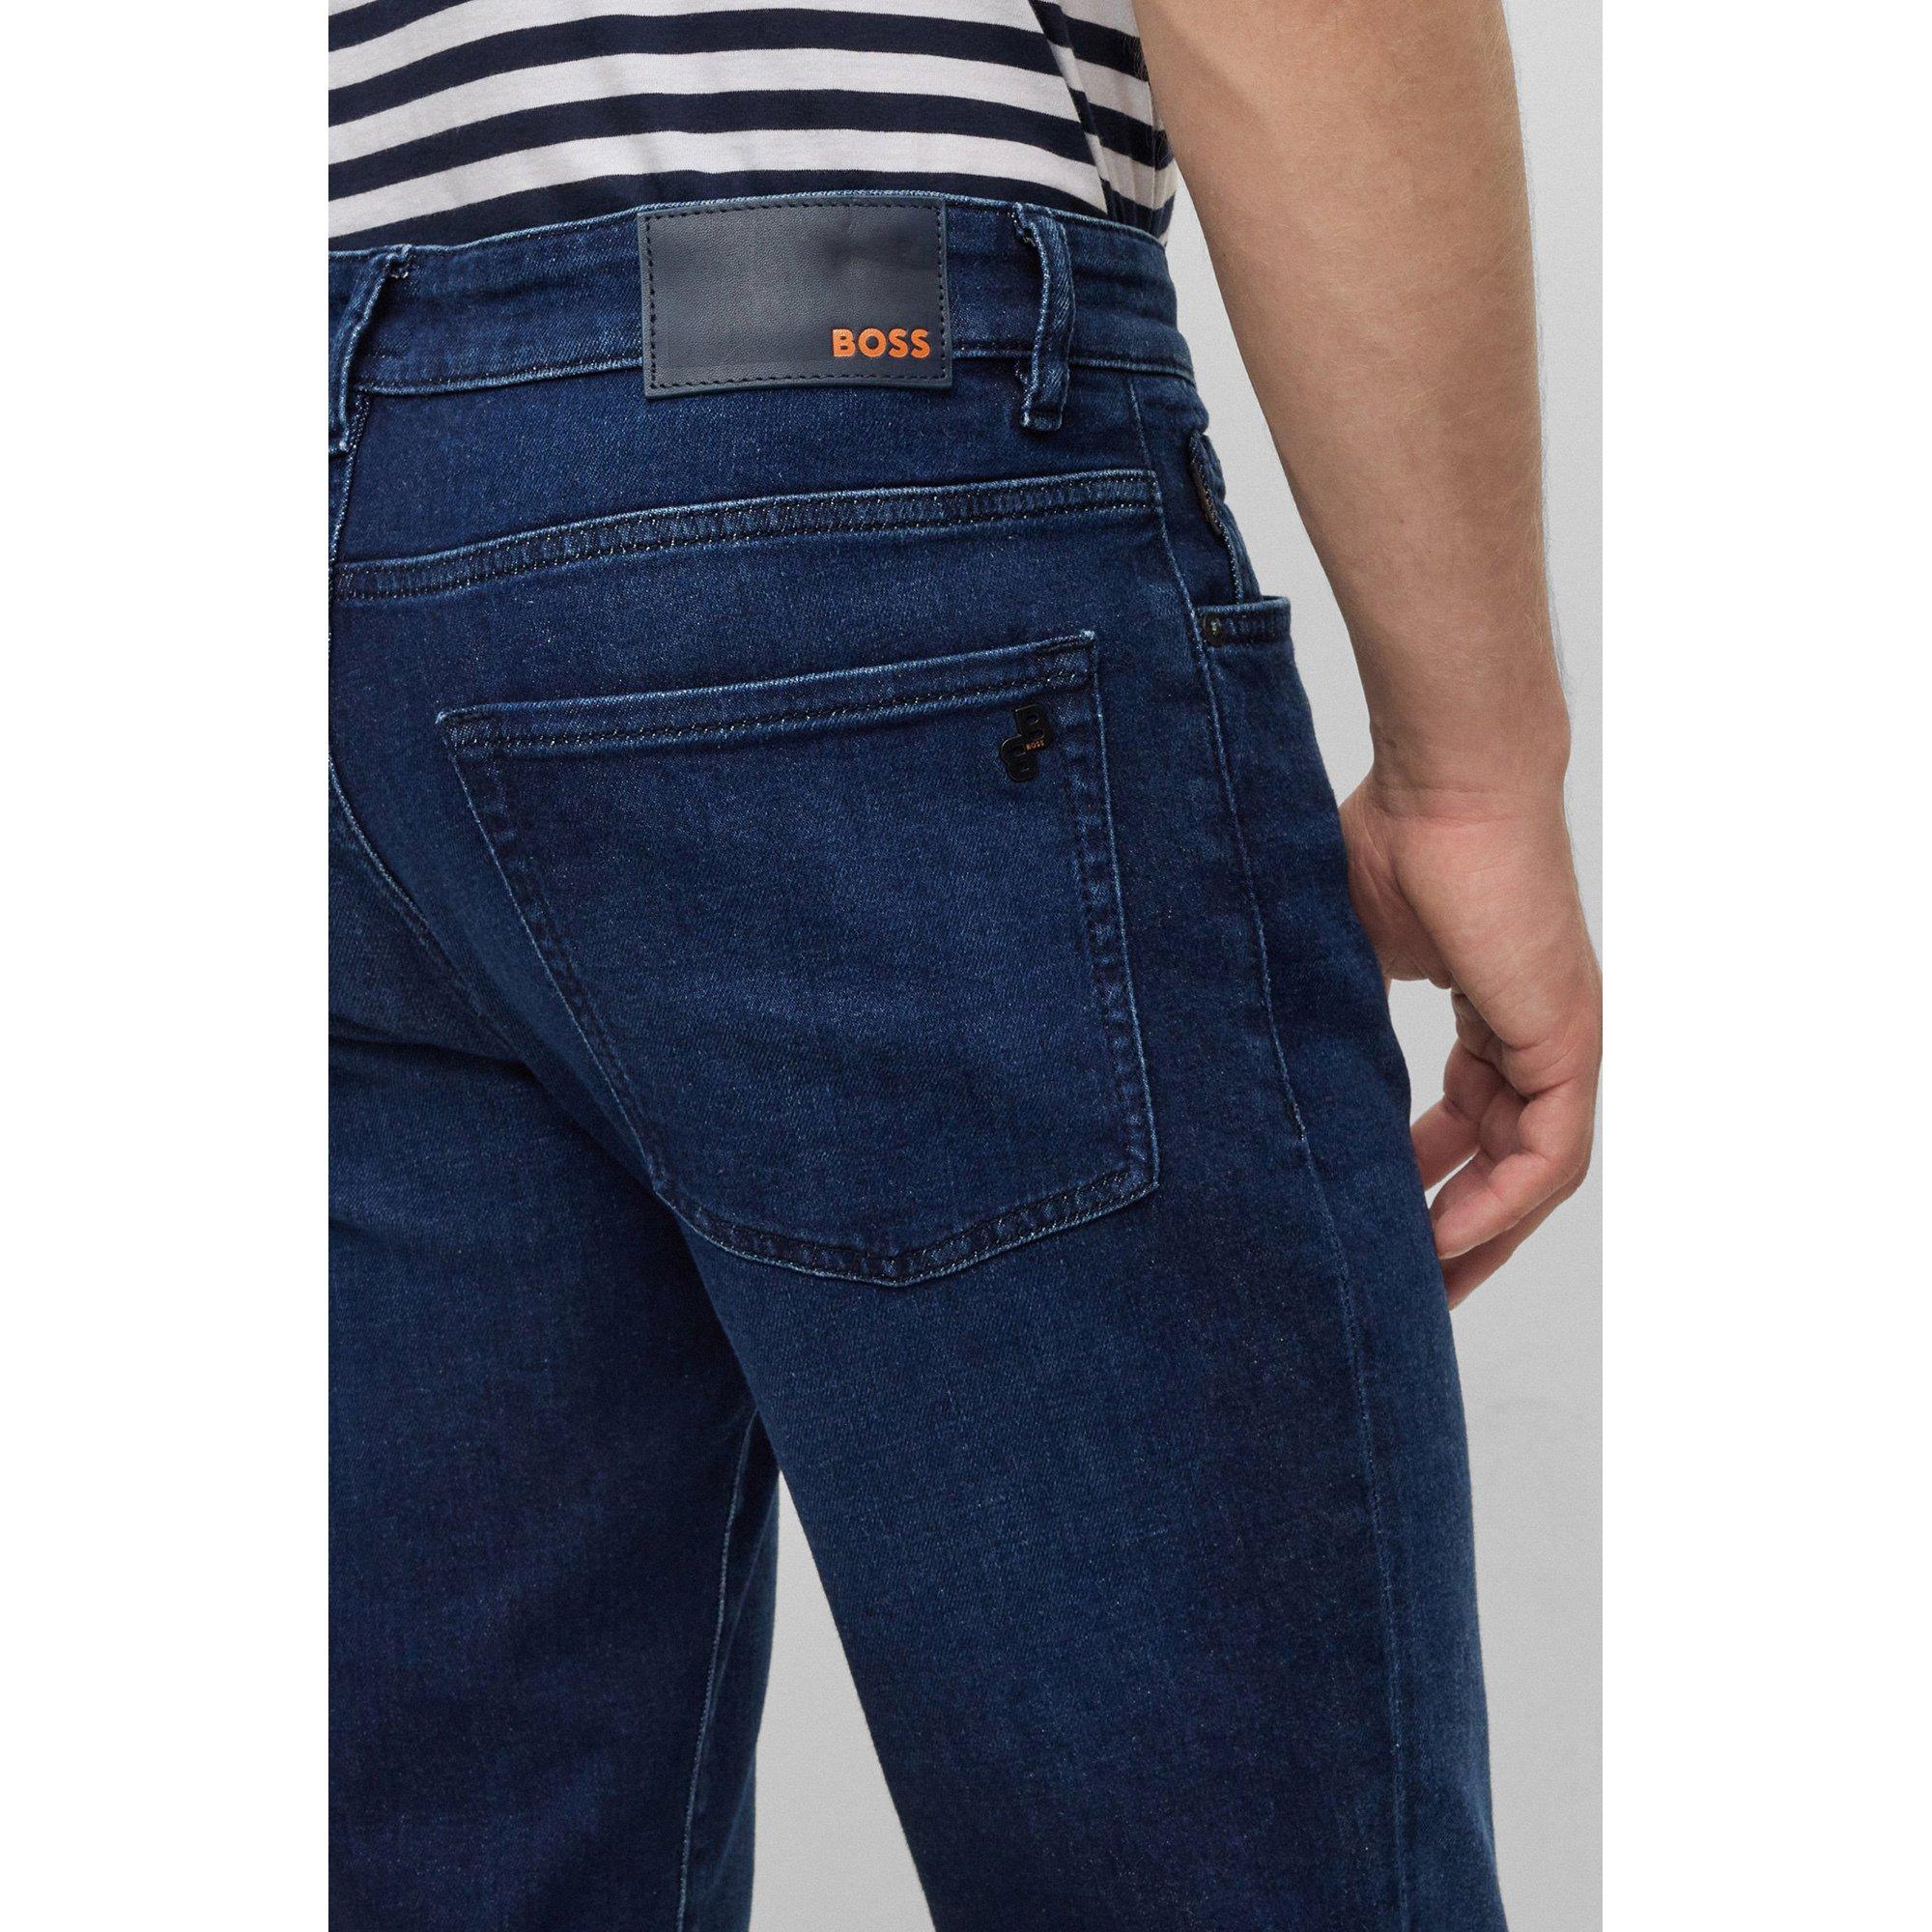 BOSS ORANGE RE.MAIN BC-C Jeans, Regular Fit 